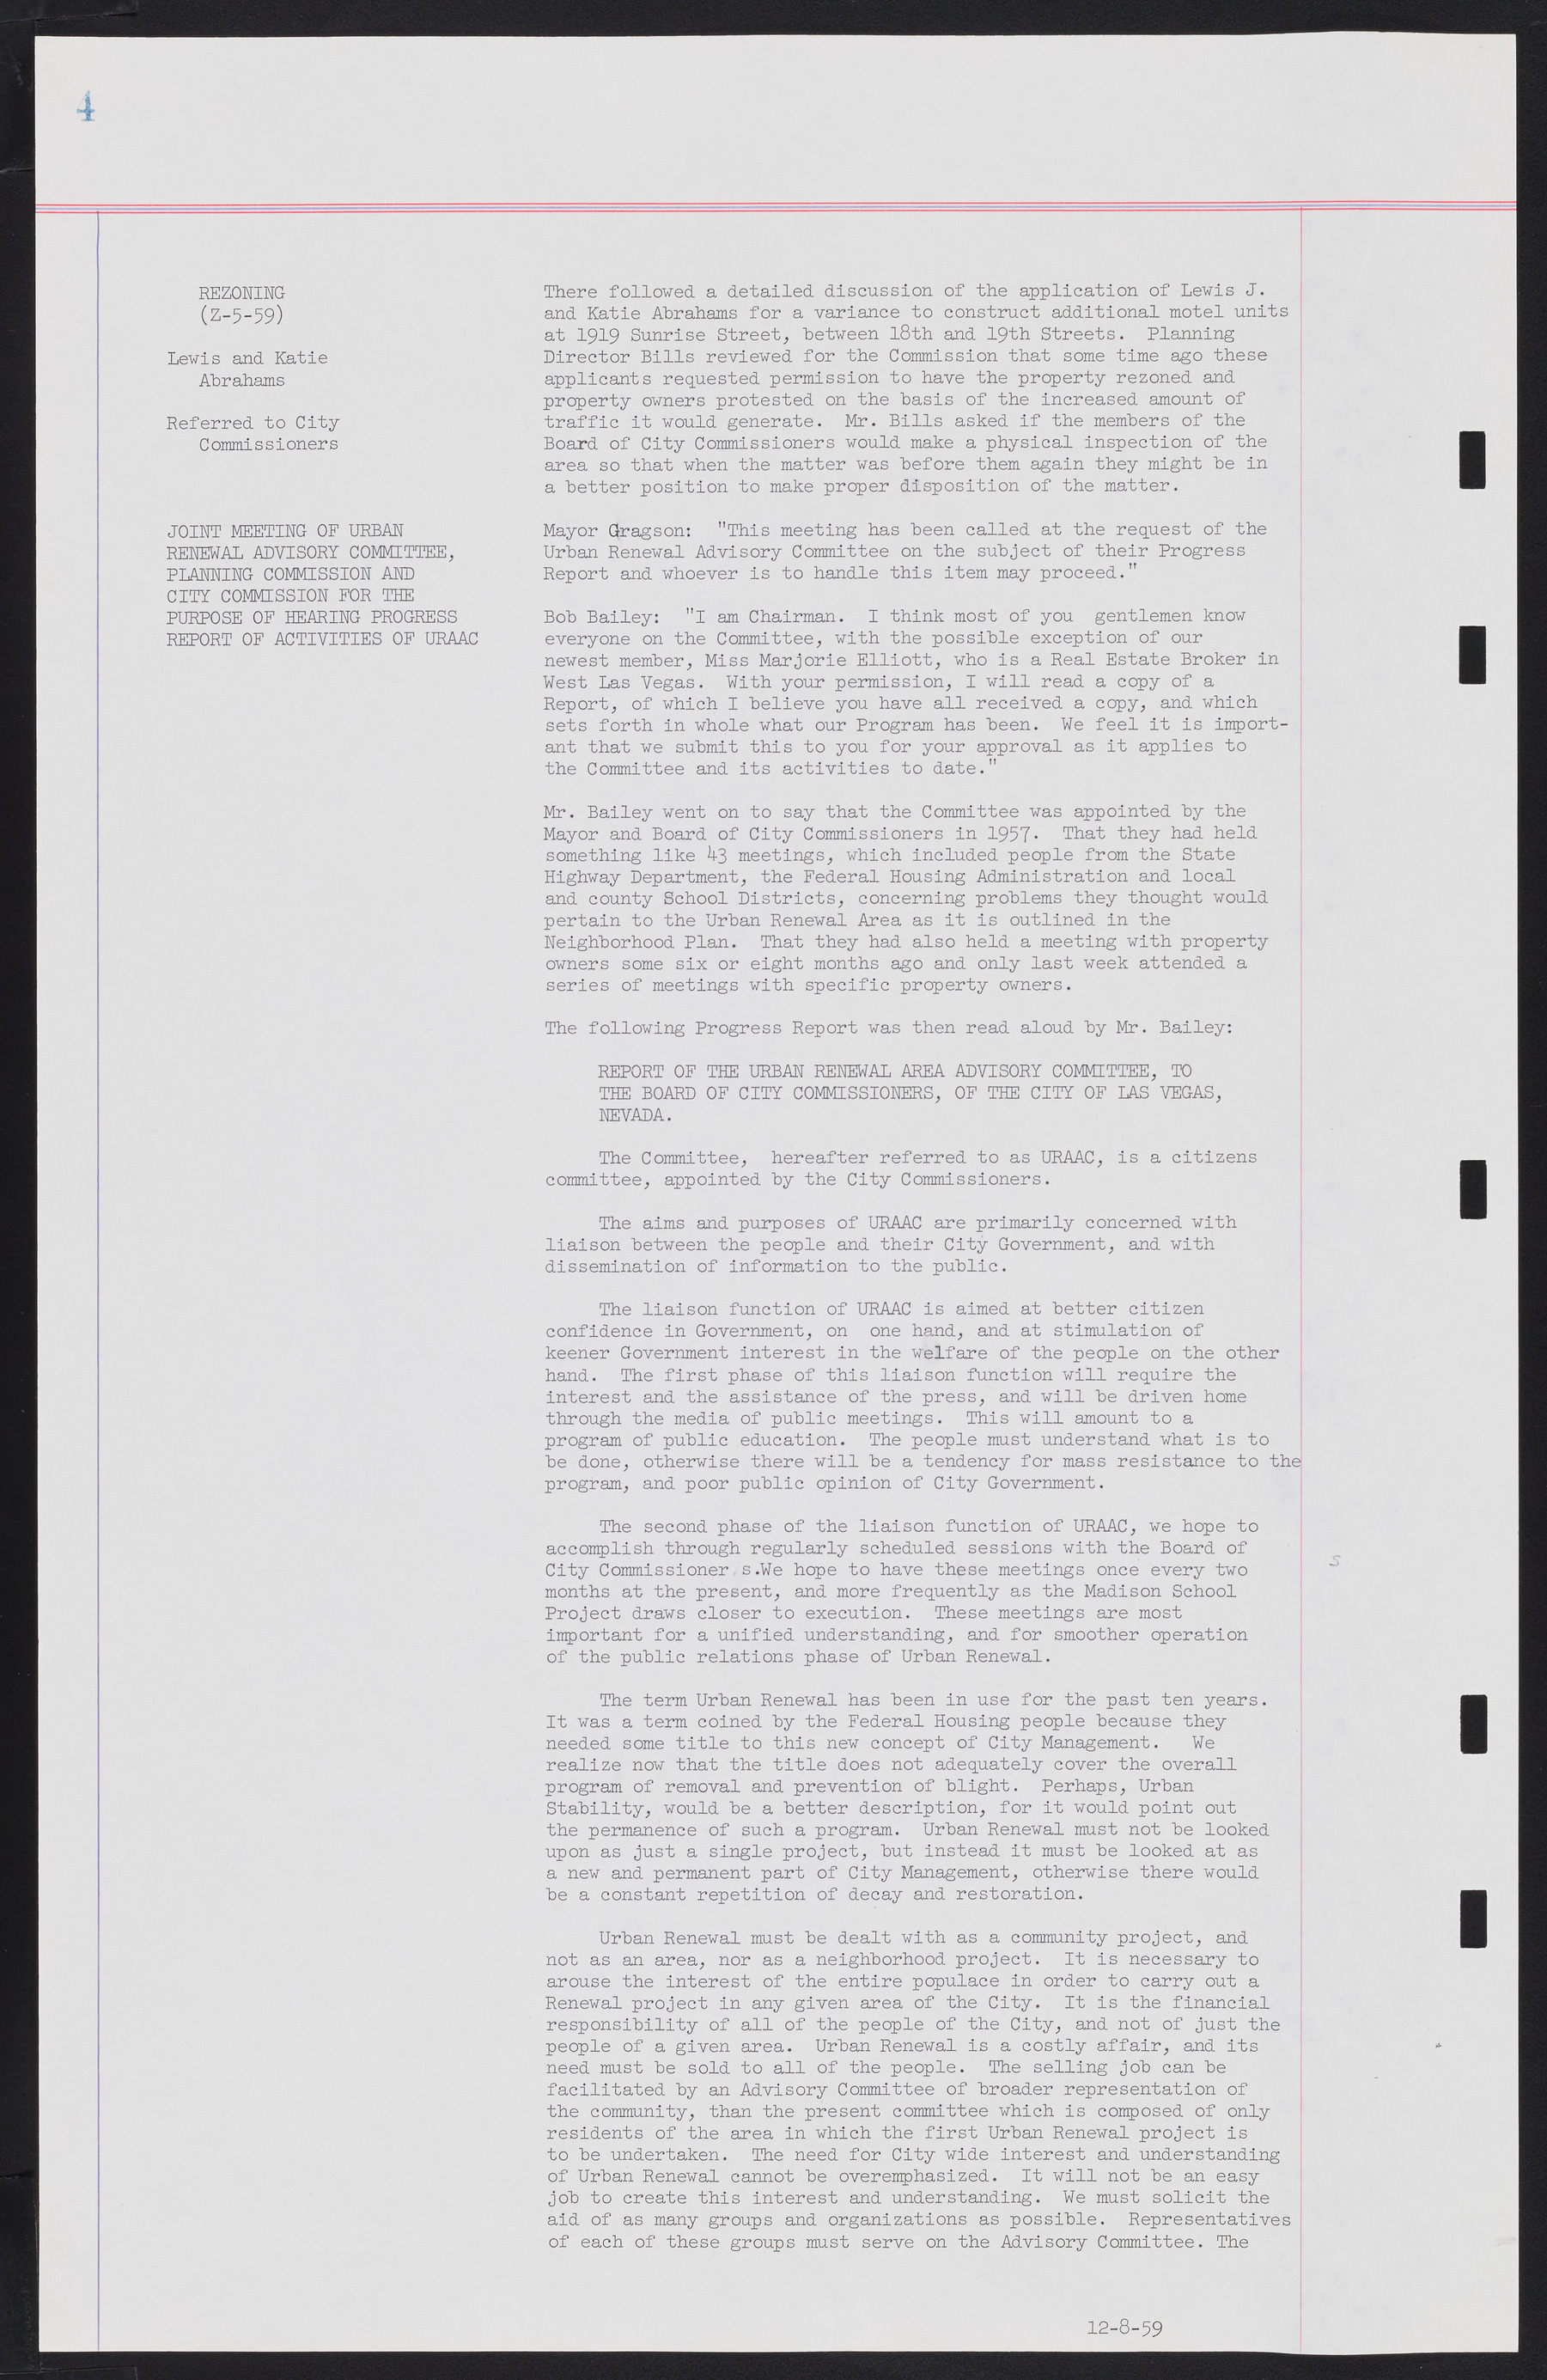 Las Vegas City Commission Minutes, December 8, 1959 to February 17, 1960, lvc000012-8